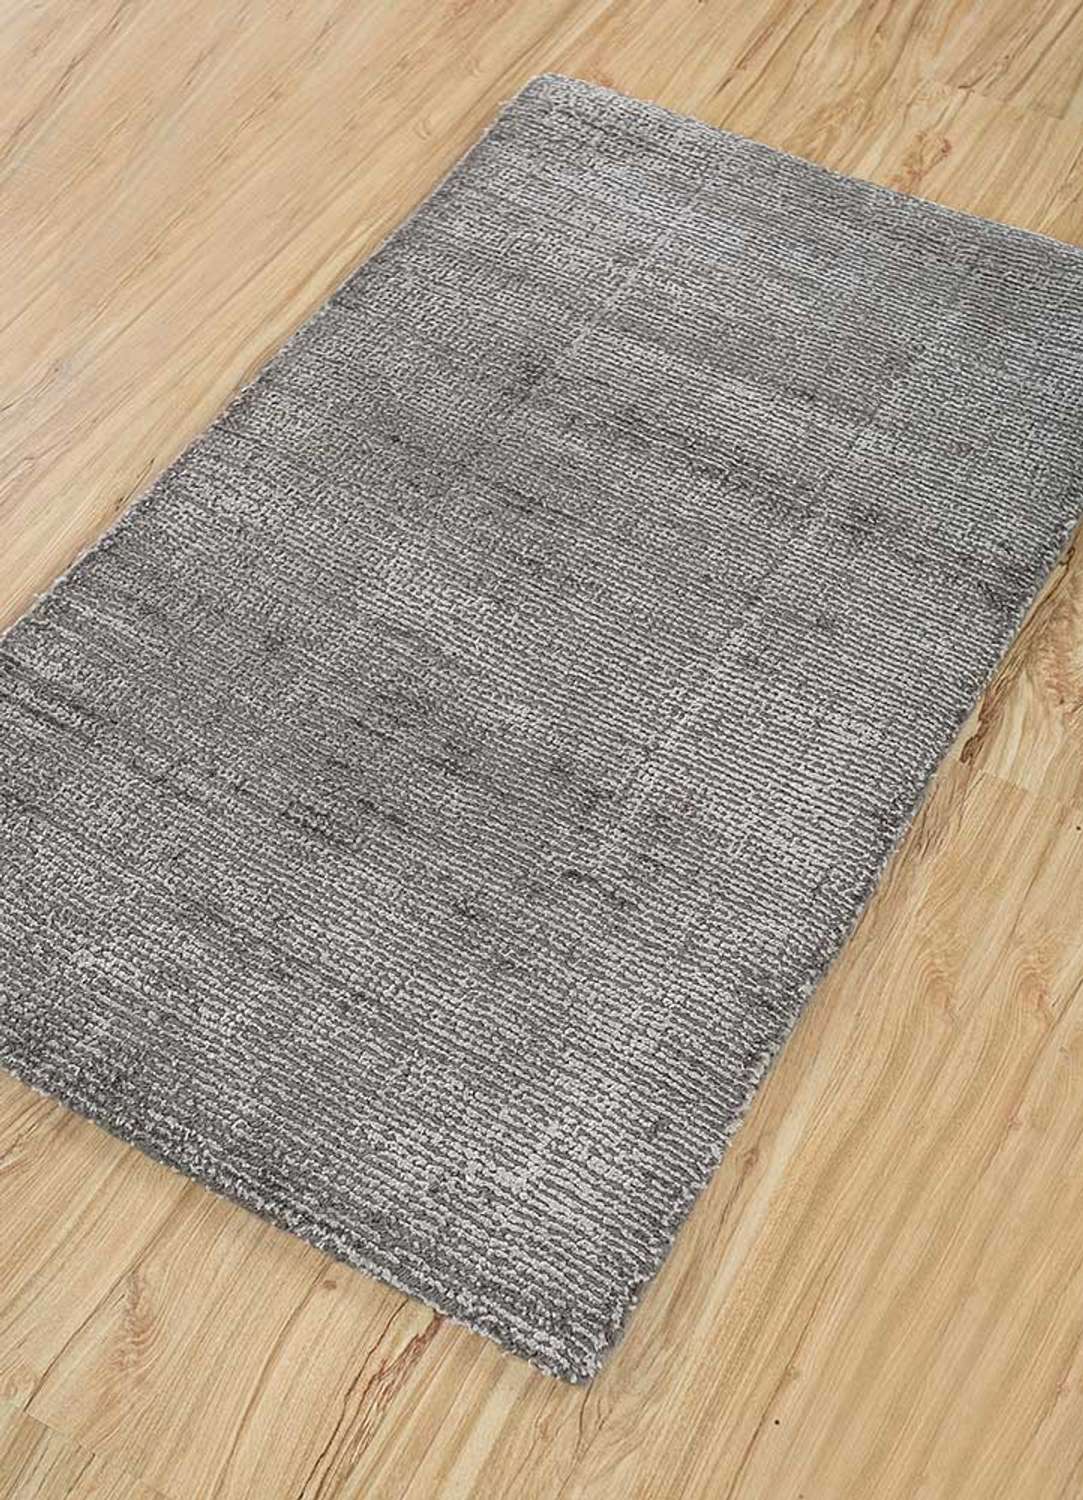 Designerski dywan - Colton - prostokątny